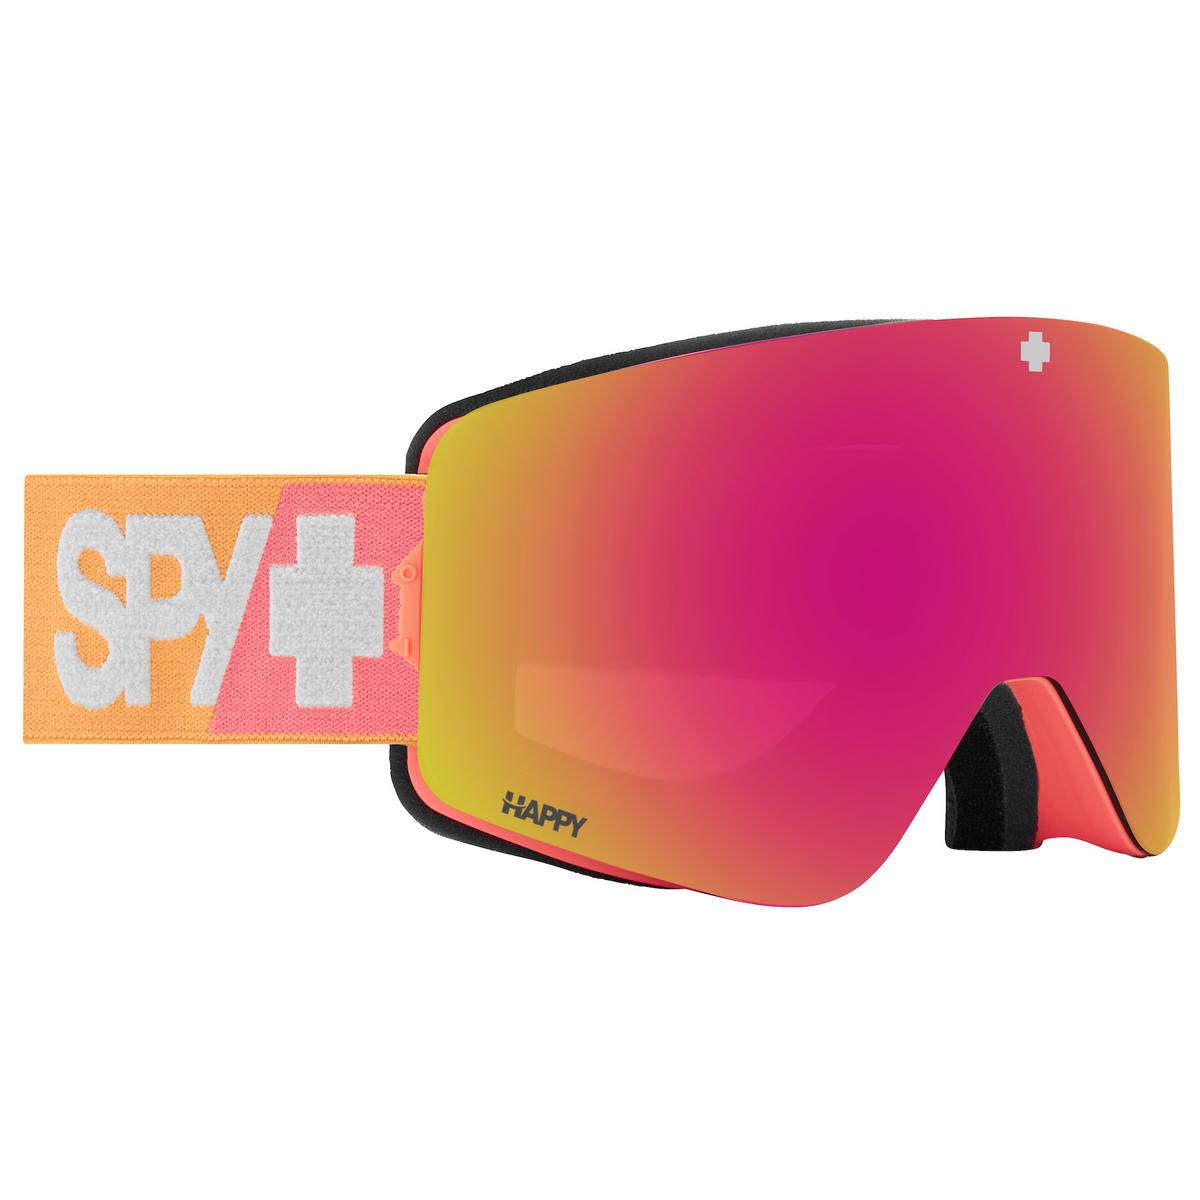 Spy Optic Marauder SE Goggles